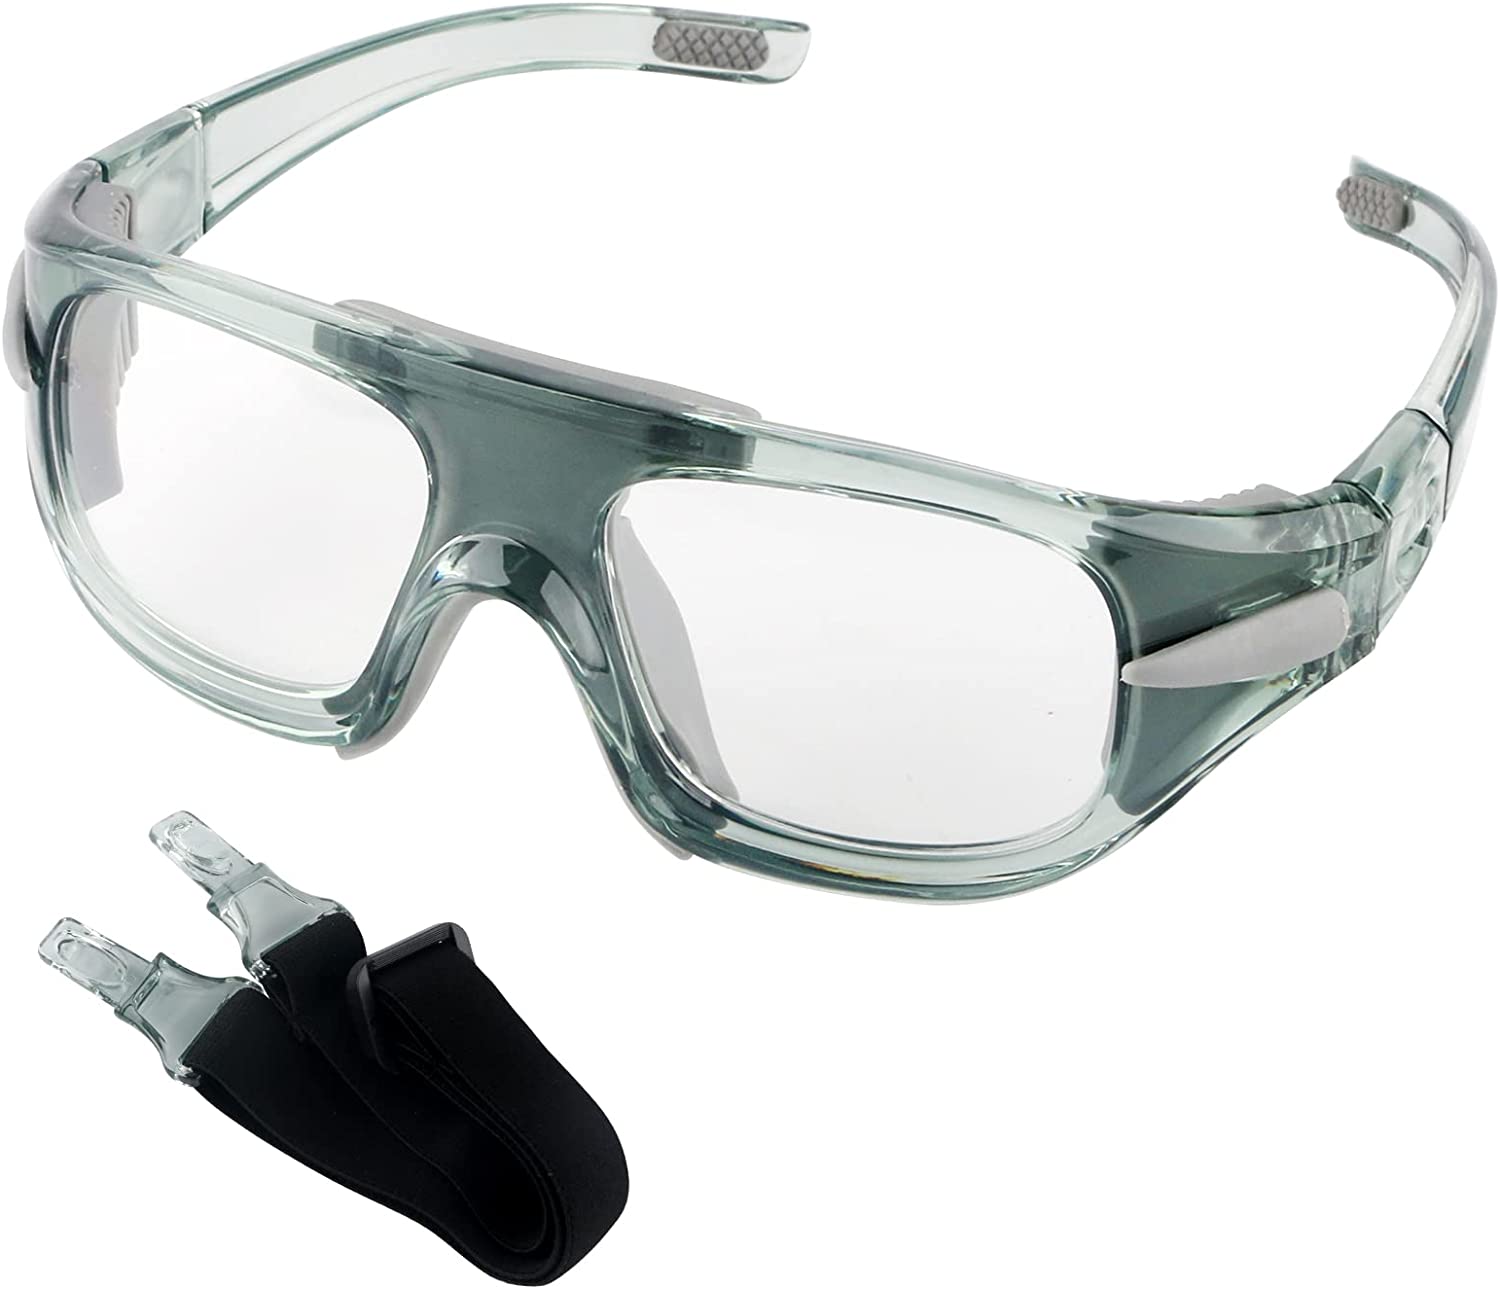 Prescription Sports Sunglasses with Adjustable Strap Grey